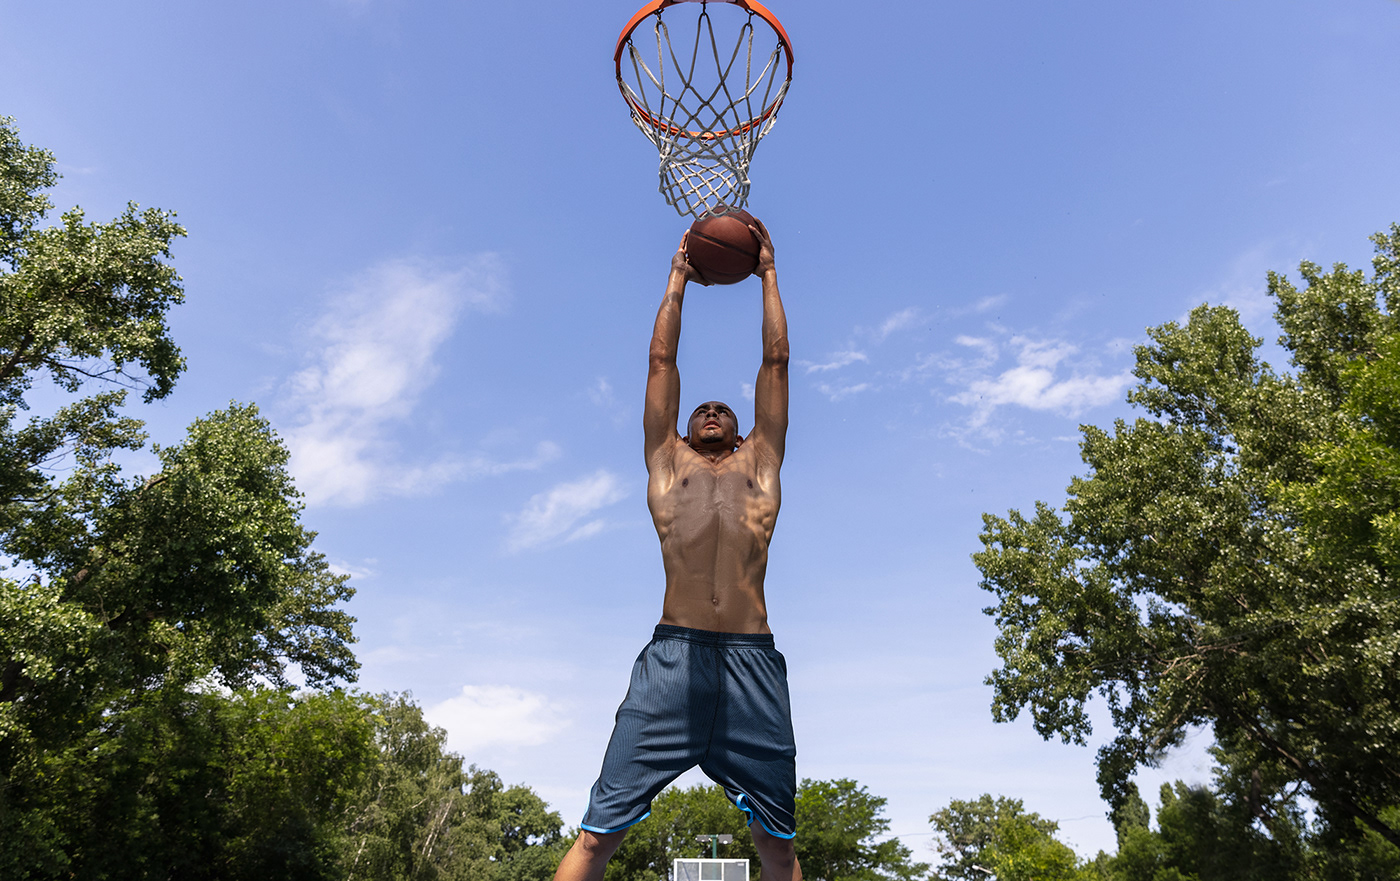 basketball jump lifestyle outdor sport Streetball training